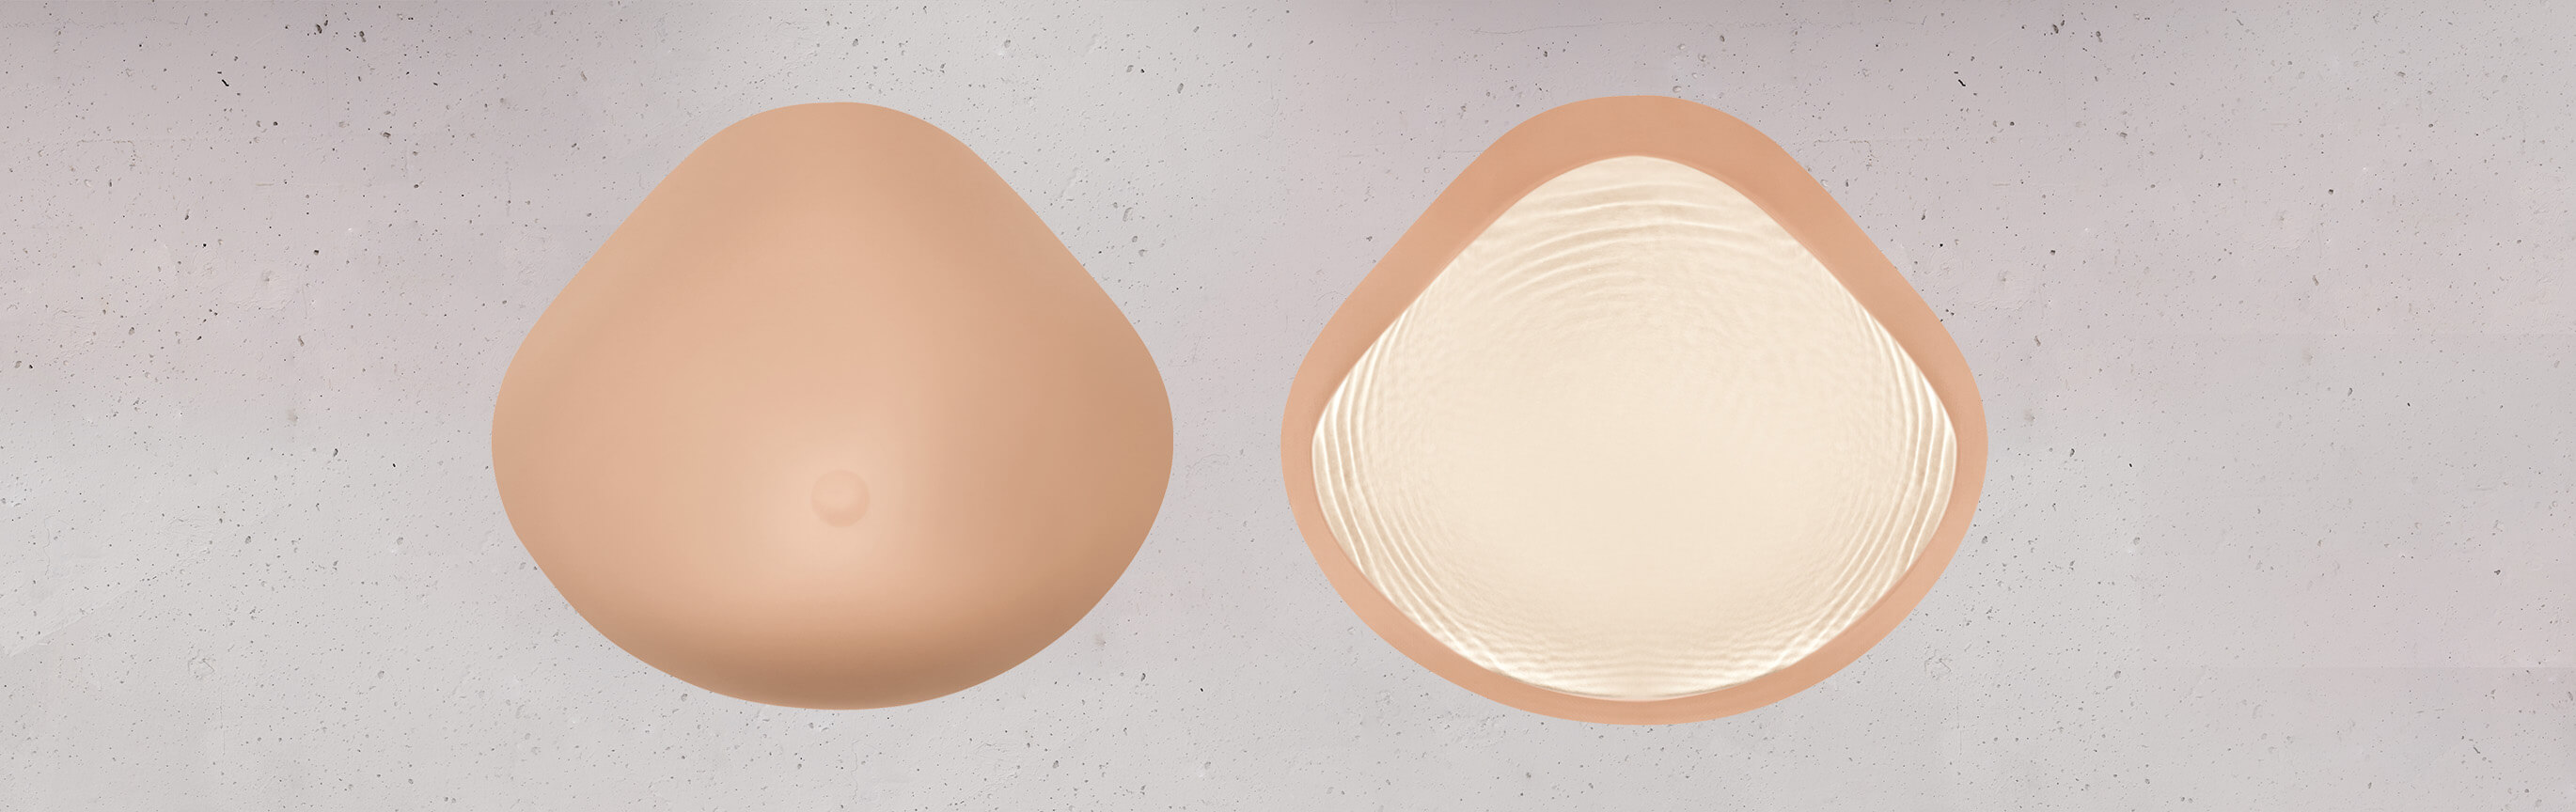 Cosmetic Breast Forms - Desktop